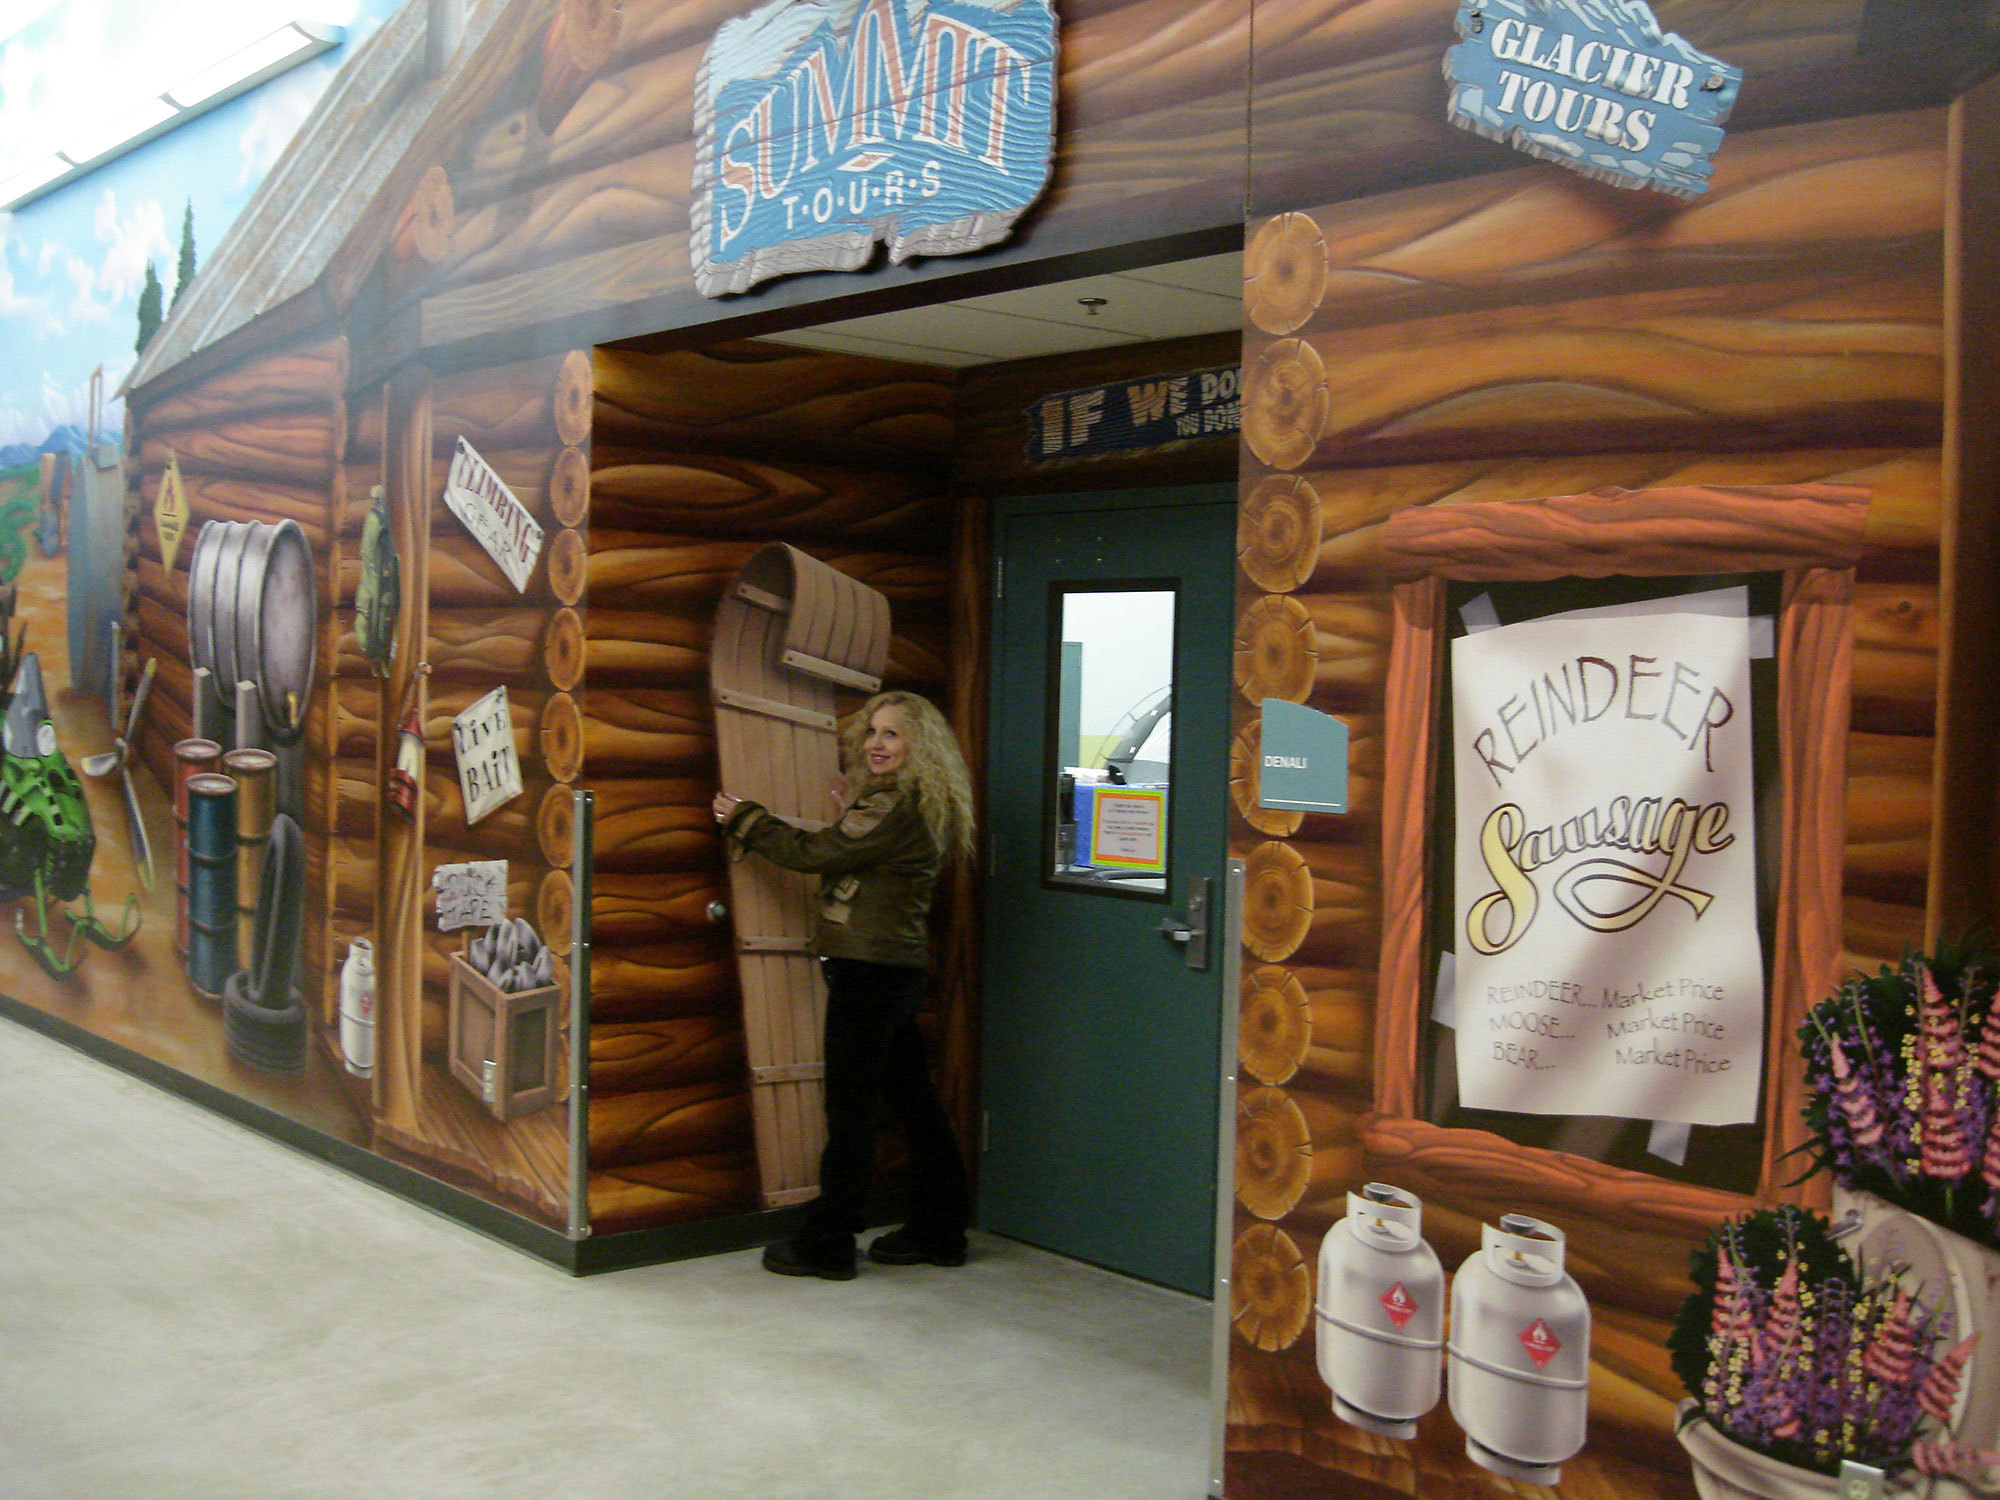 Camping Themed Log cabin Lodge Facade at Changepoint Alaska